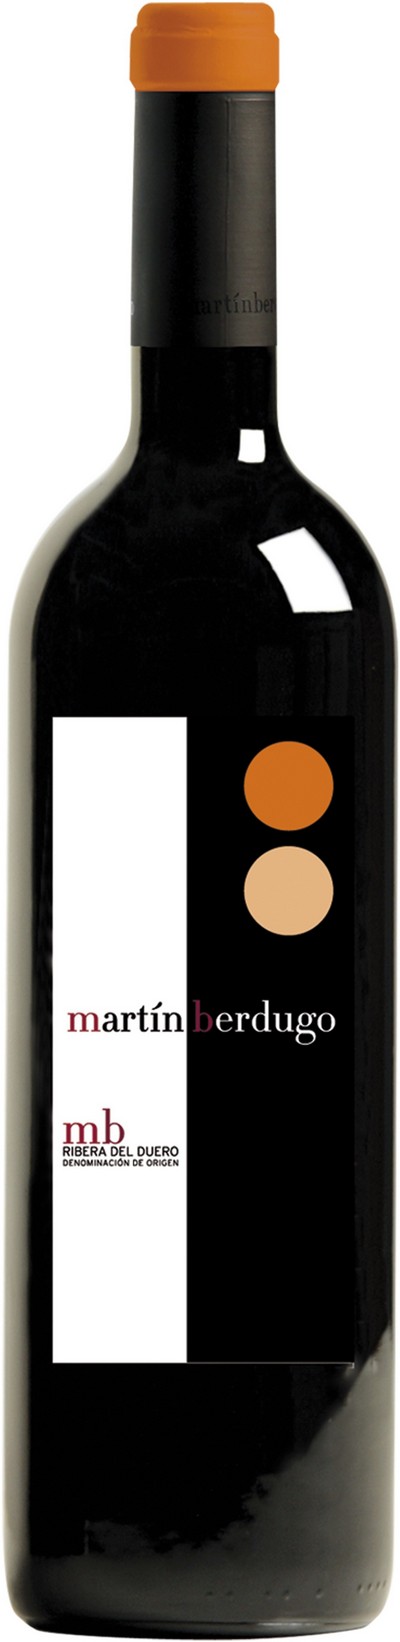 martin-berdugo-mb-especial-2011